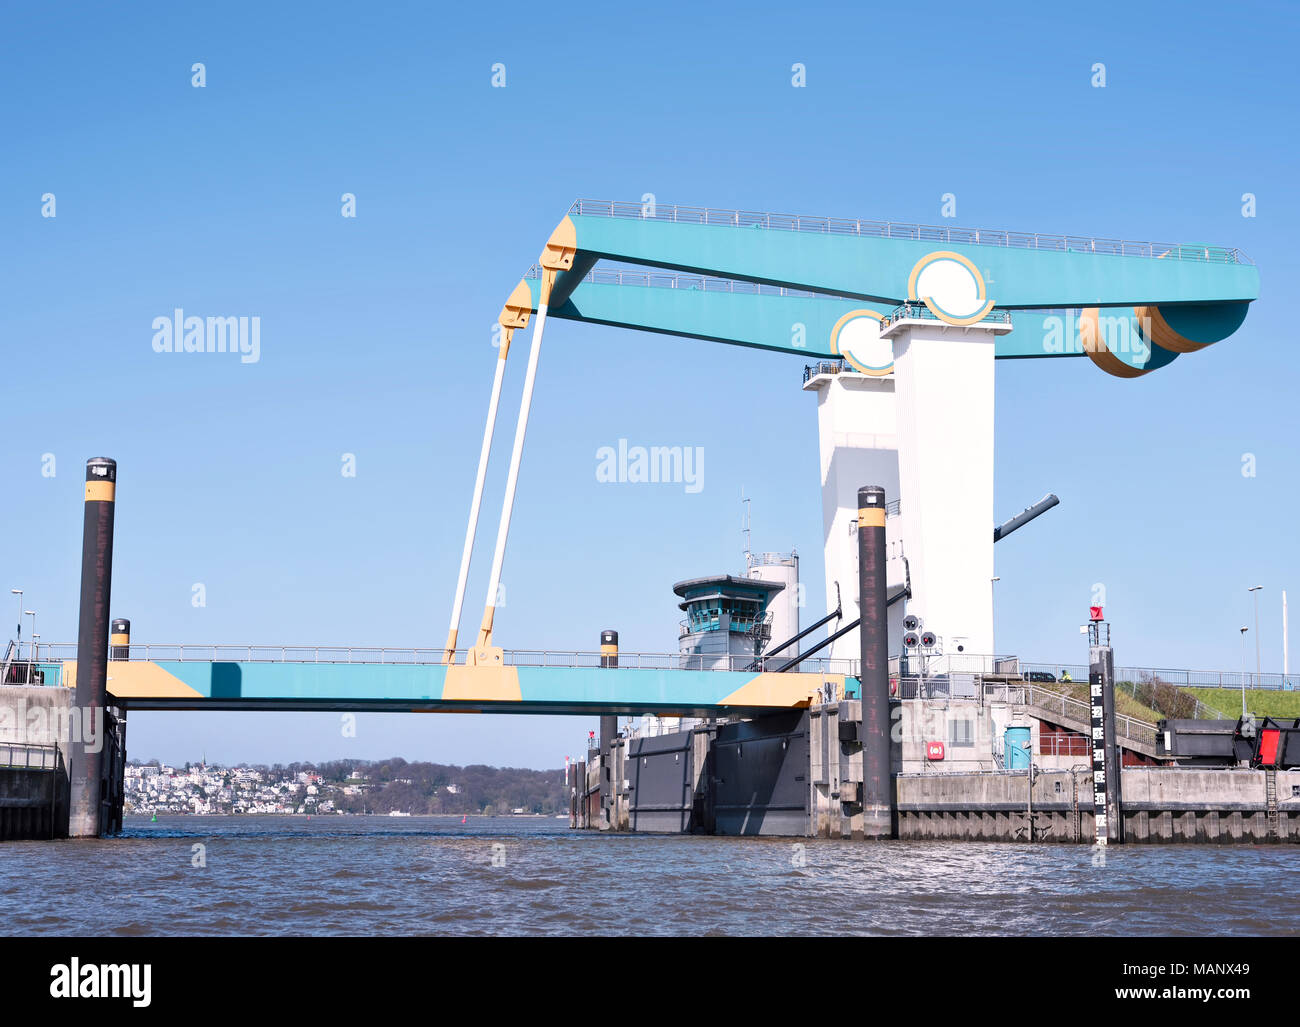 Drawbridge on a river, shipping or ship transport monument. Germany, Hamburg. Stock Photo